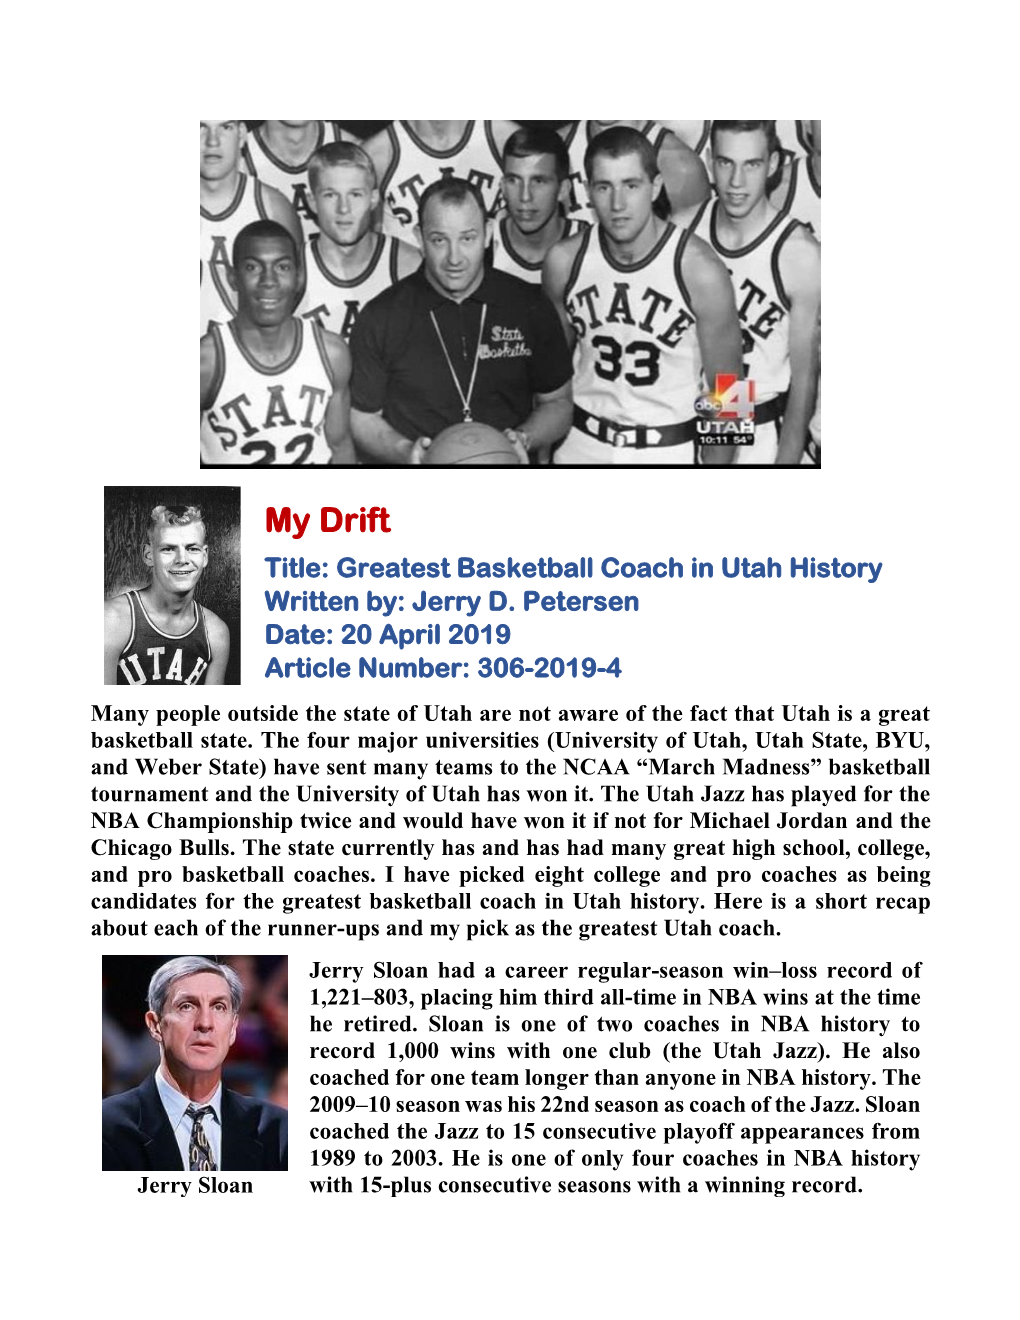 My Drift Title: Greatest Basketball Coach in Utah History Written By: Jerry D